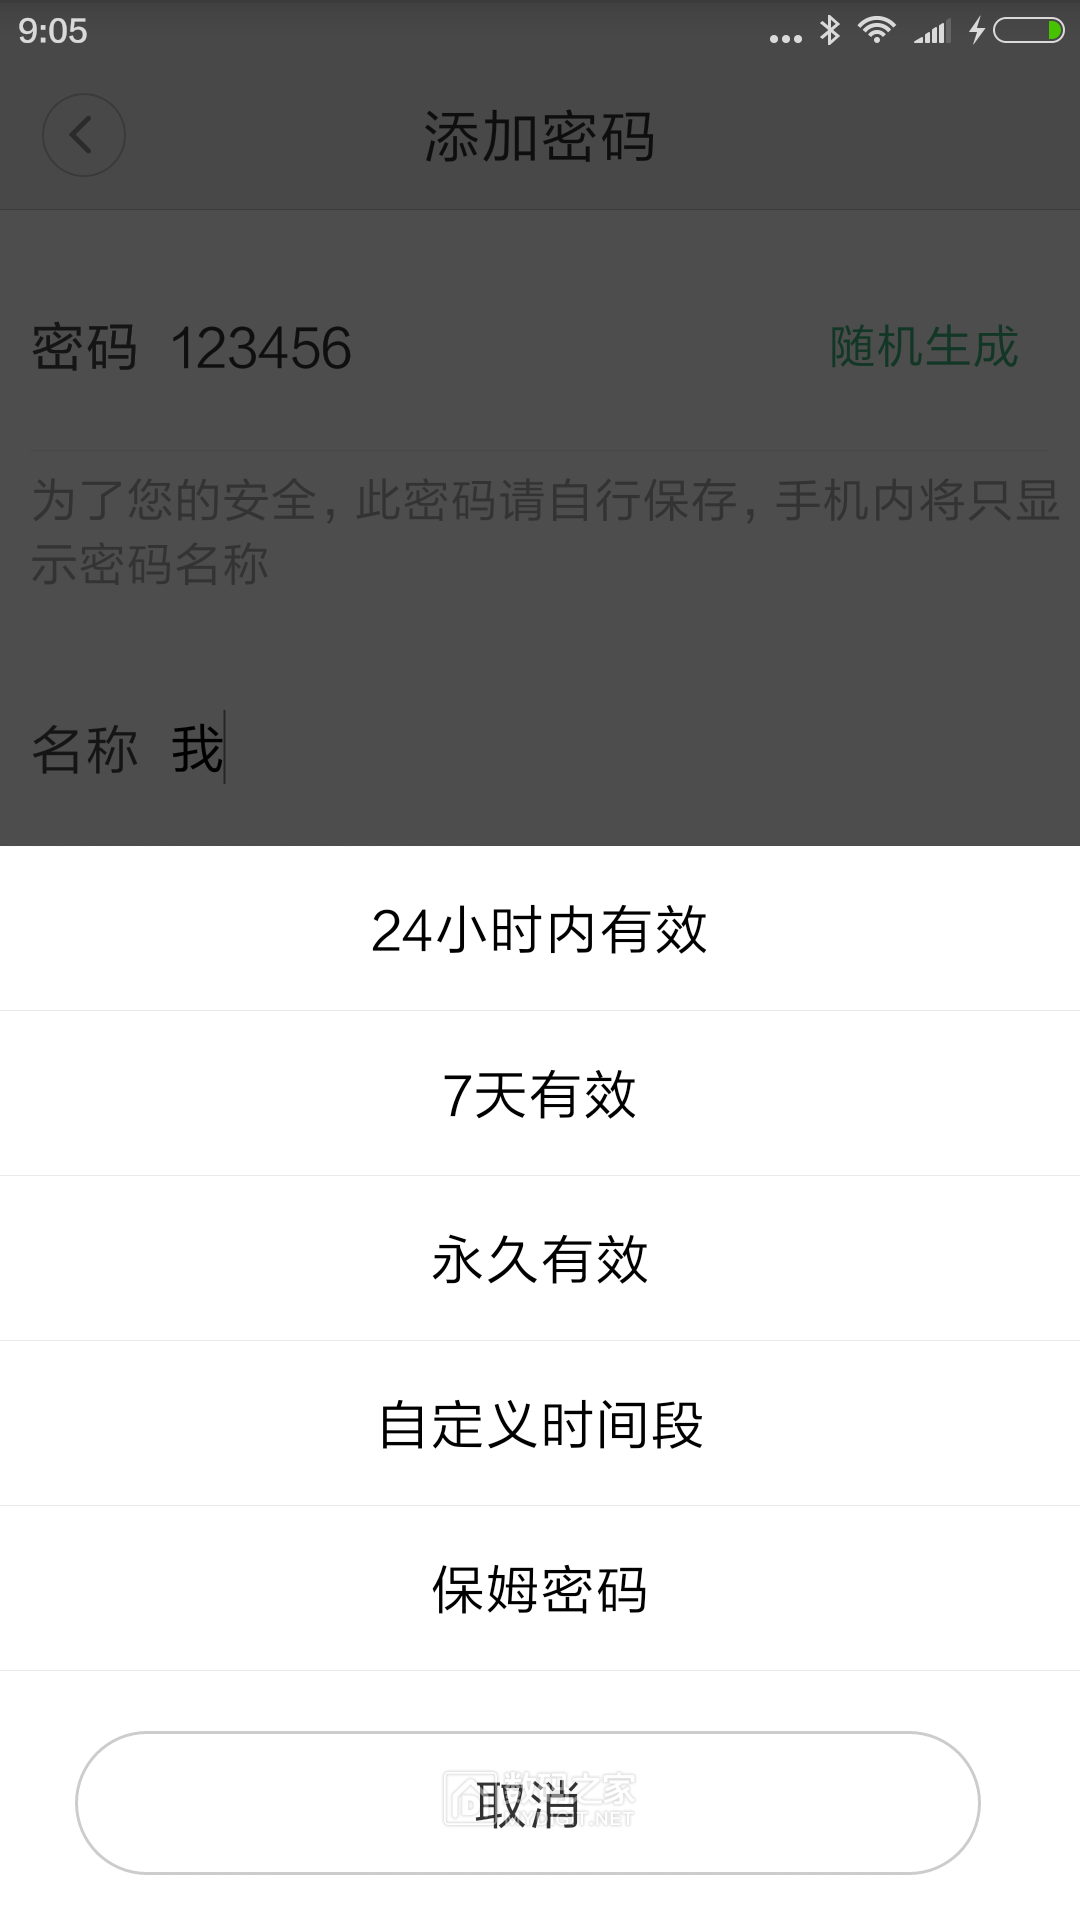 Screenshot_2019-01-29-09-05-52_com.xiaomi.smartho.png